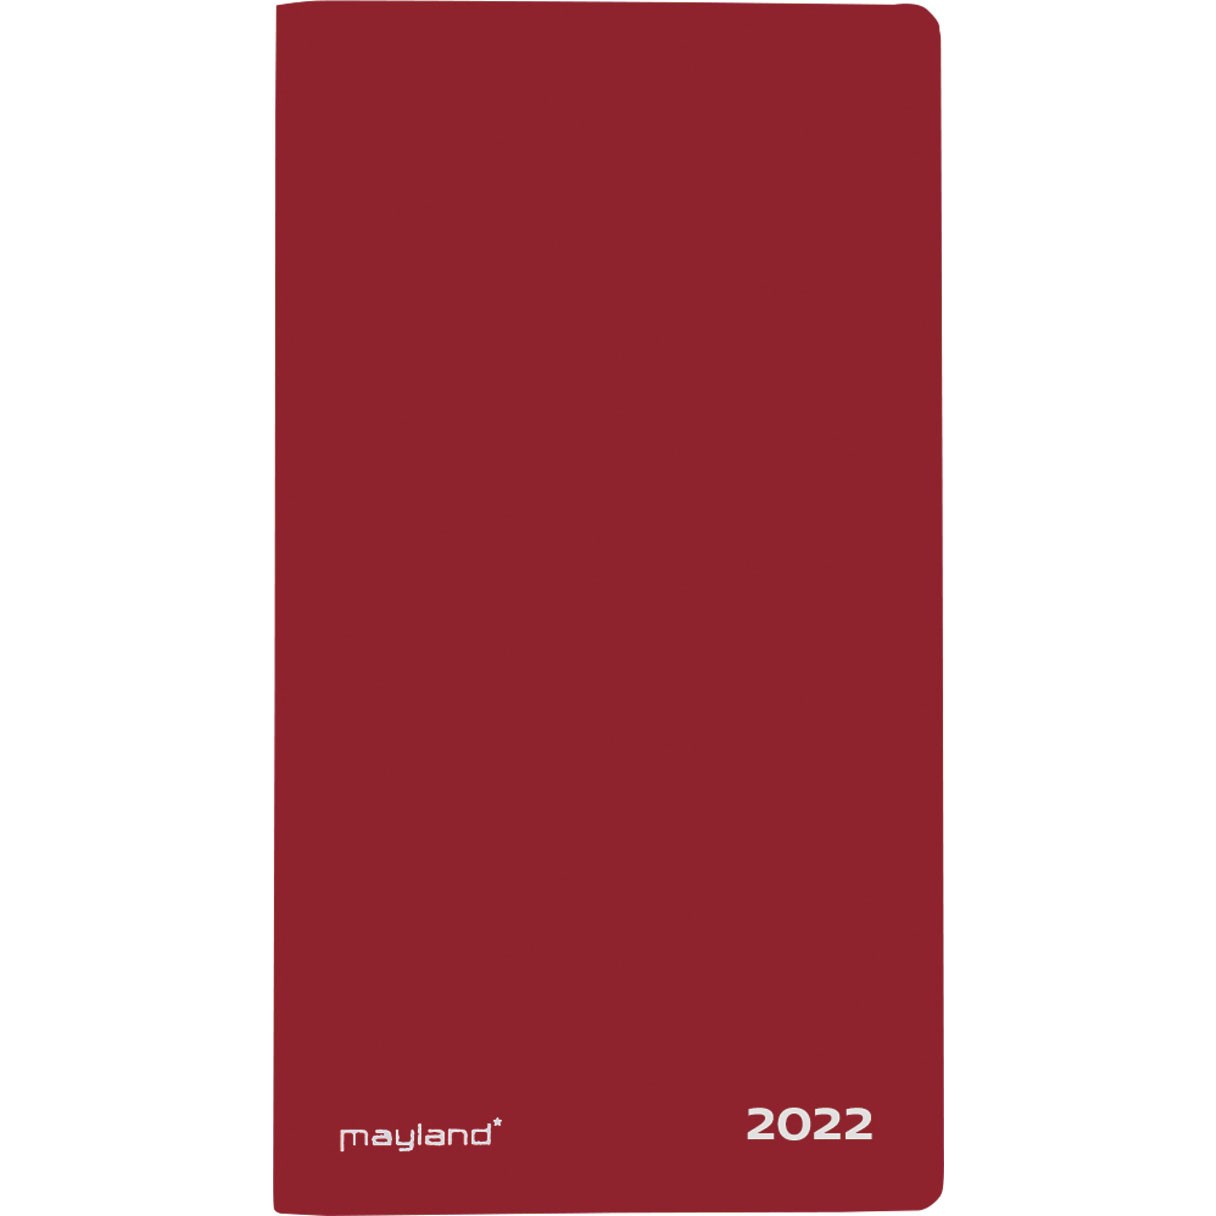 Mayland indexplanner m/tlf reg 17x9,5 cm rød 22090010